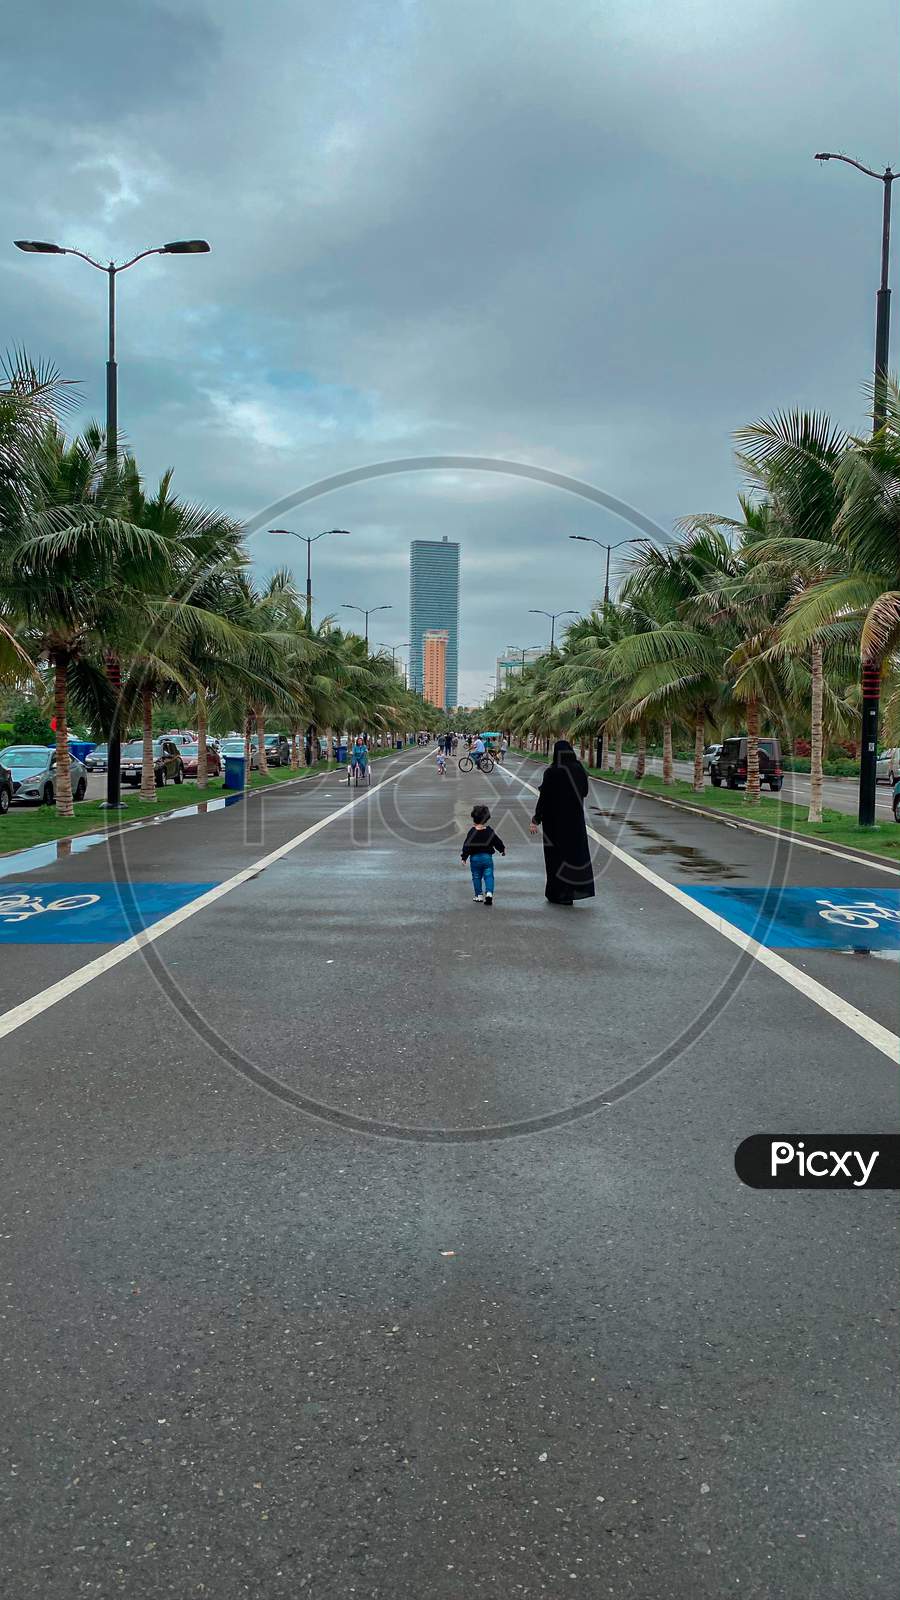 A Woman Walking With A Child On Road In Corniche, Jeddah, Saudi Arabia, 2021